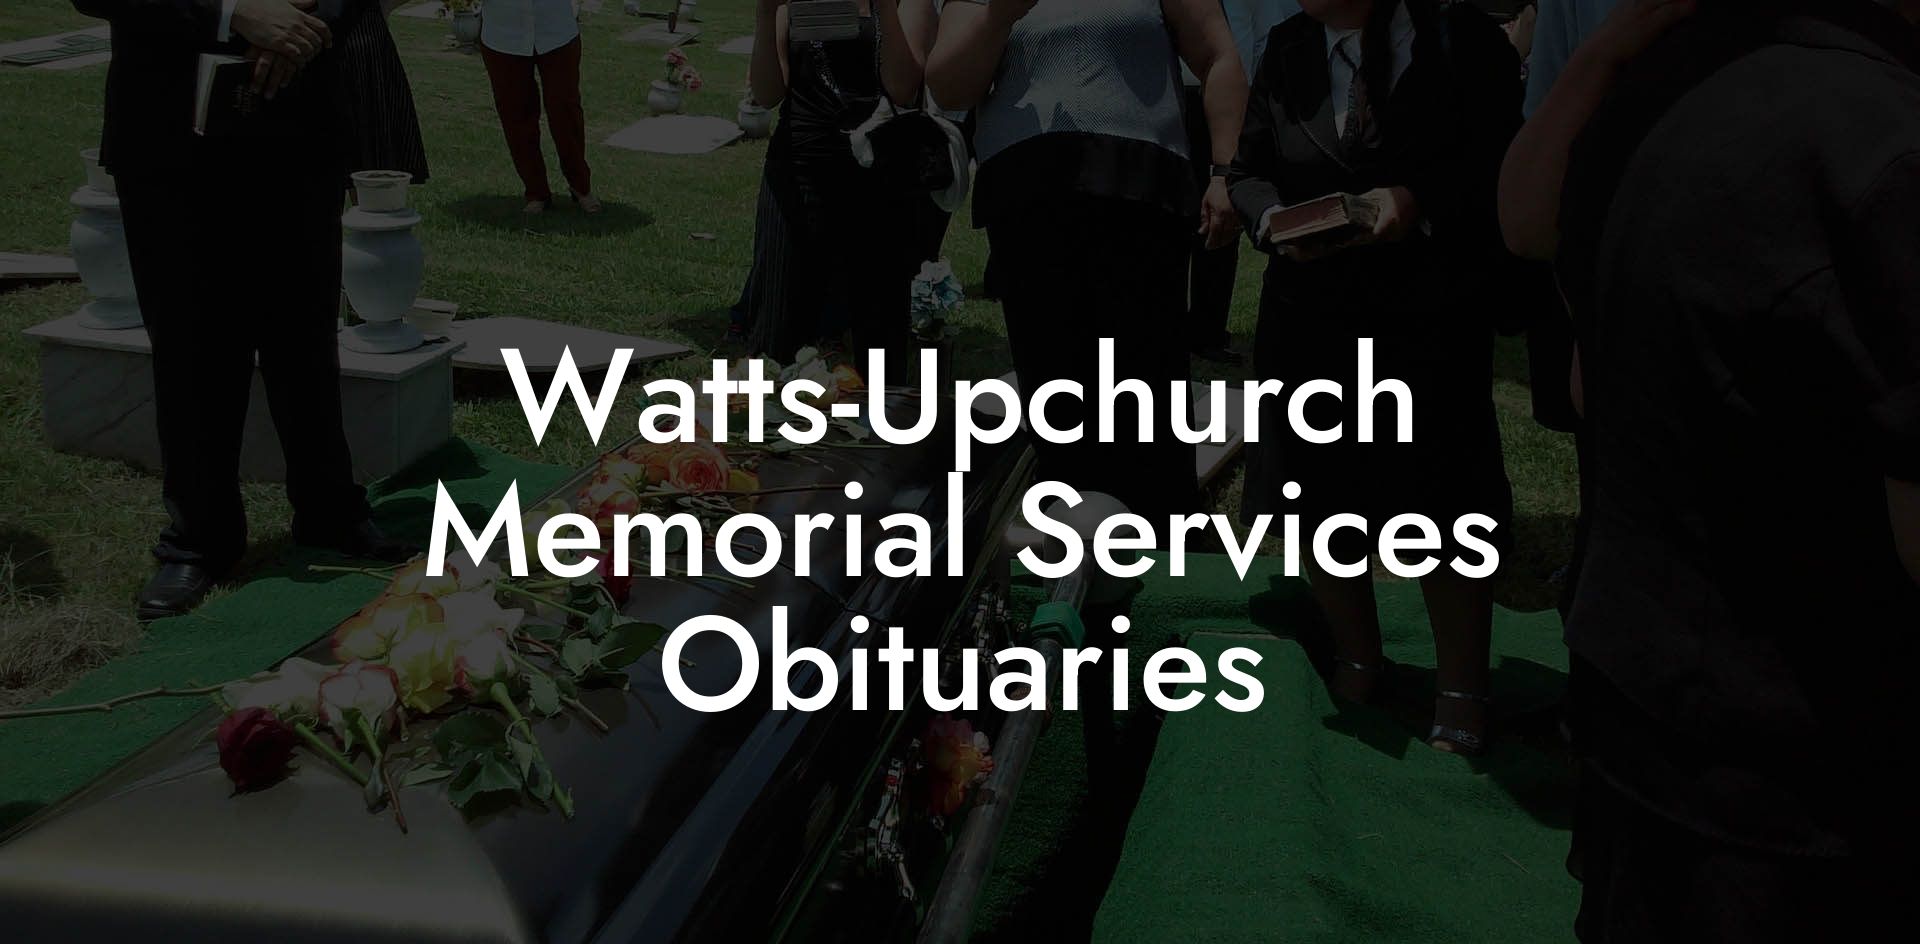 Watts-Upchurch Memorial Services Obituaries